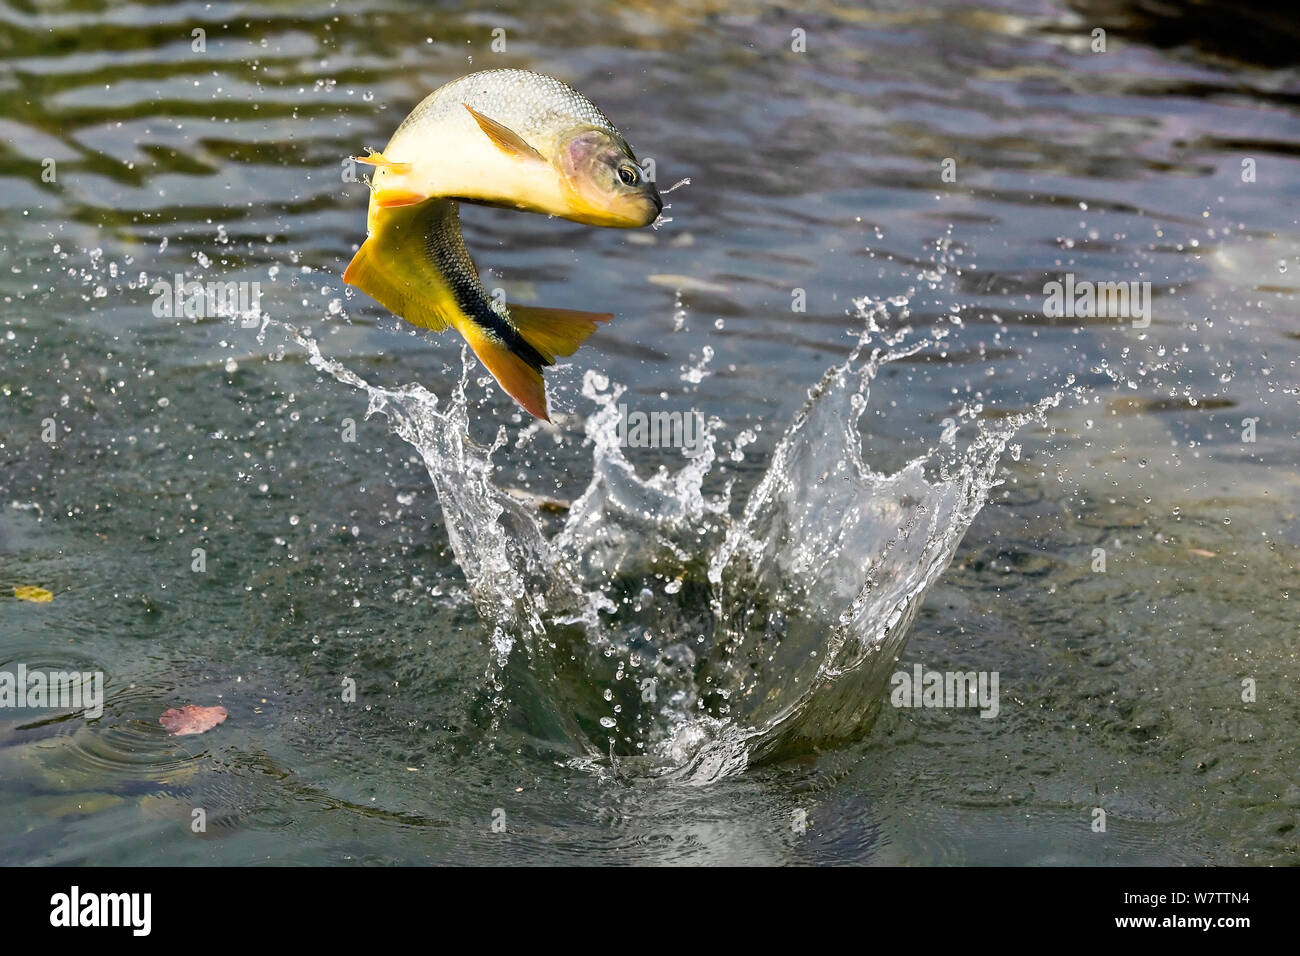 Piraputanga (Brycon hilarii) fish jumping to catch insects. Bonito, Mato Grosso do Sul, Brazil Stock Photo